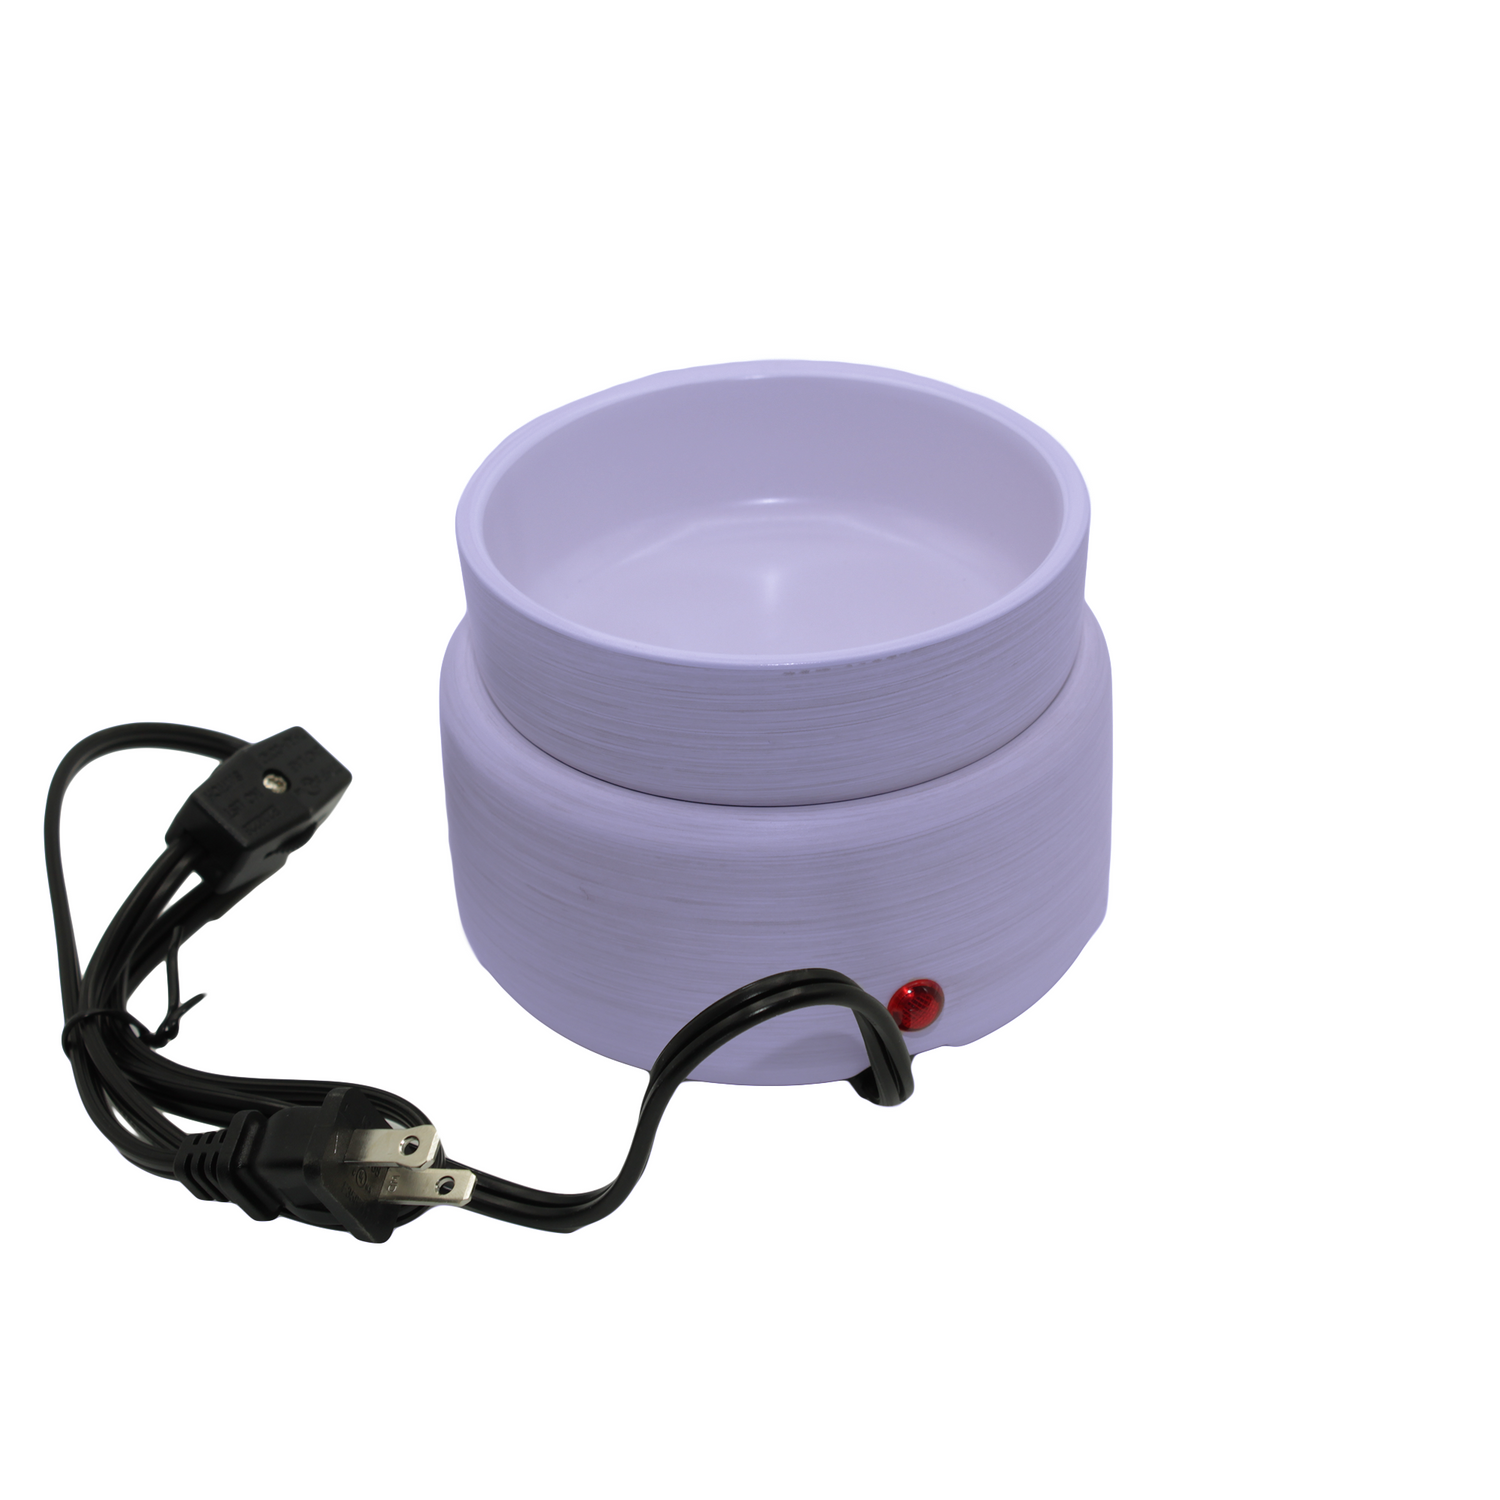 3 in 1 Electric Oil Warmer Scented Wax Warmer Candle Wax Melt Warmer Purple